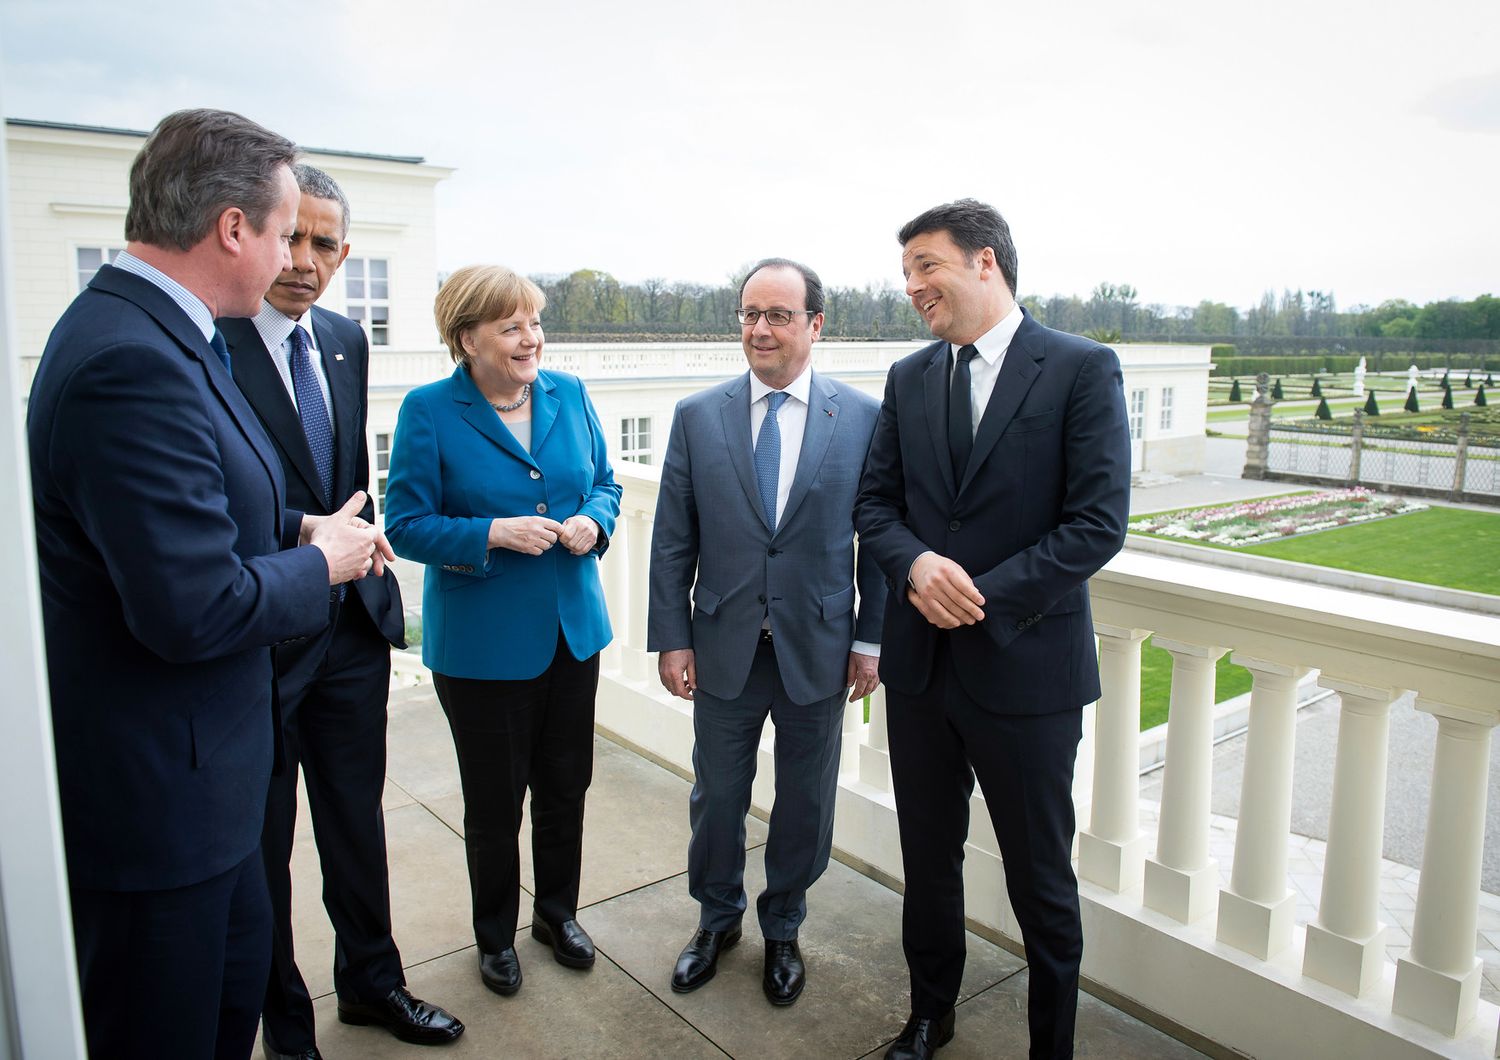 Cameron,Obama, Merkel, Hollande e Renzi (afp)&nbsp;